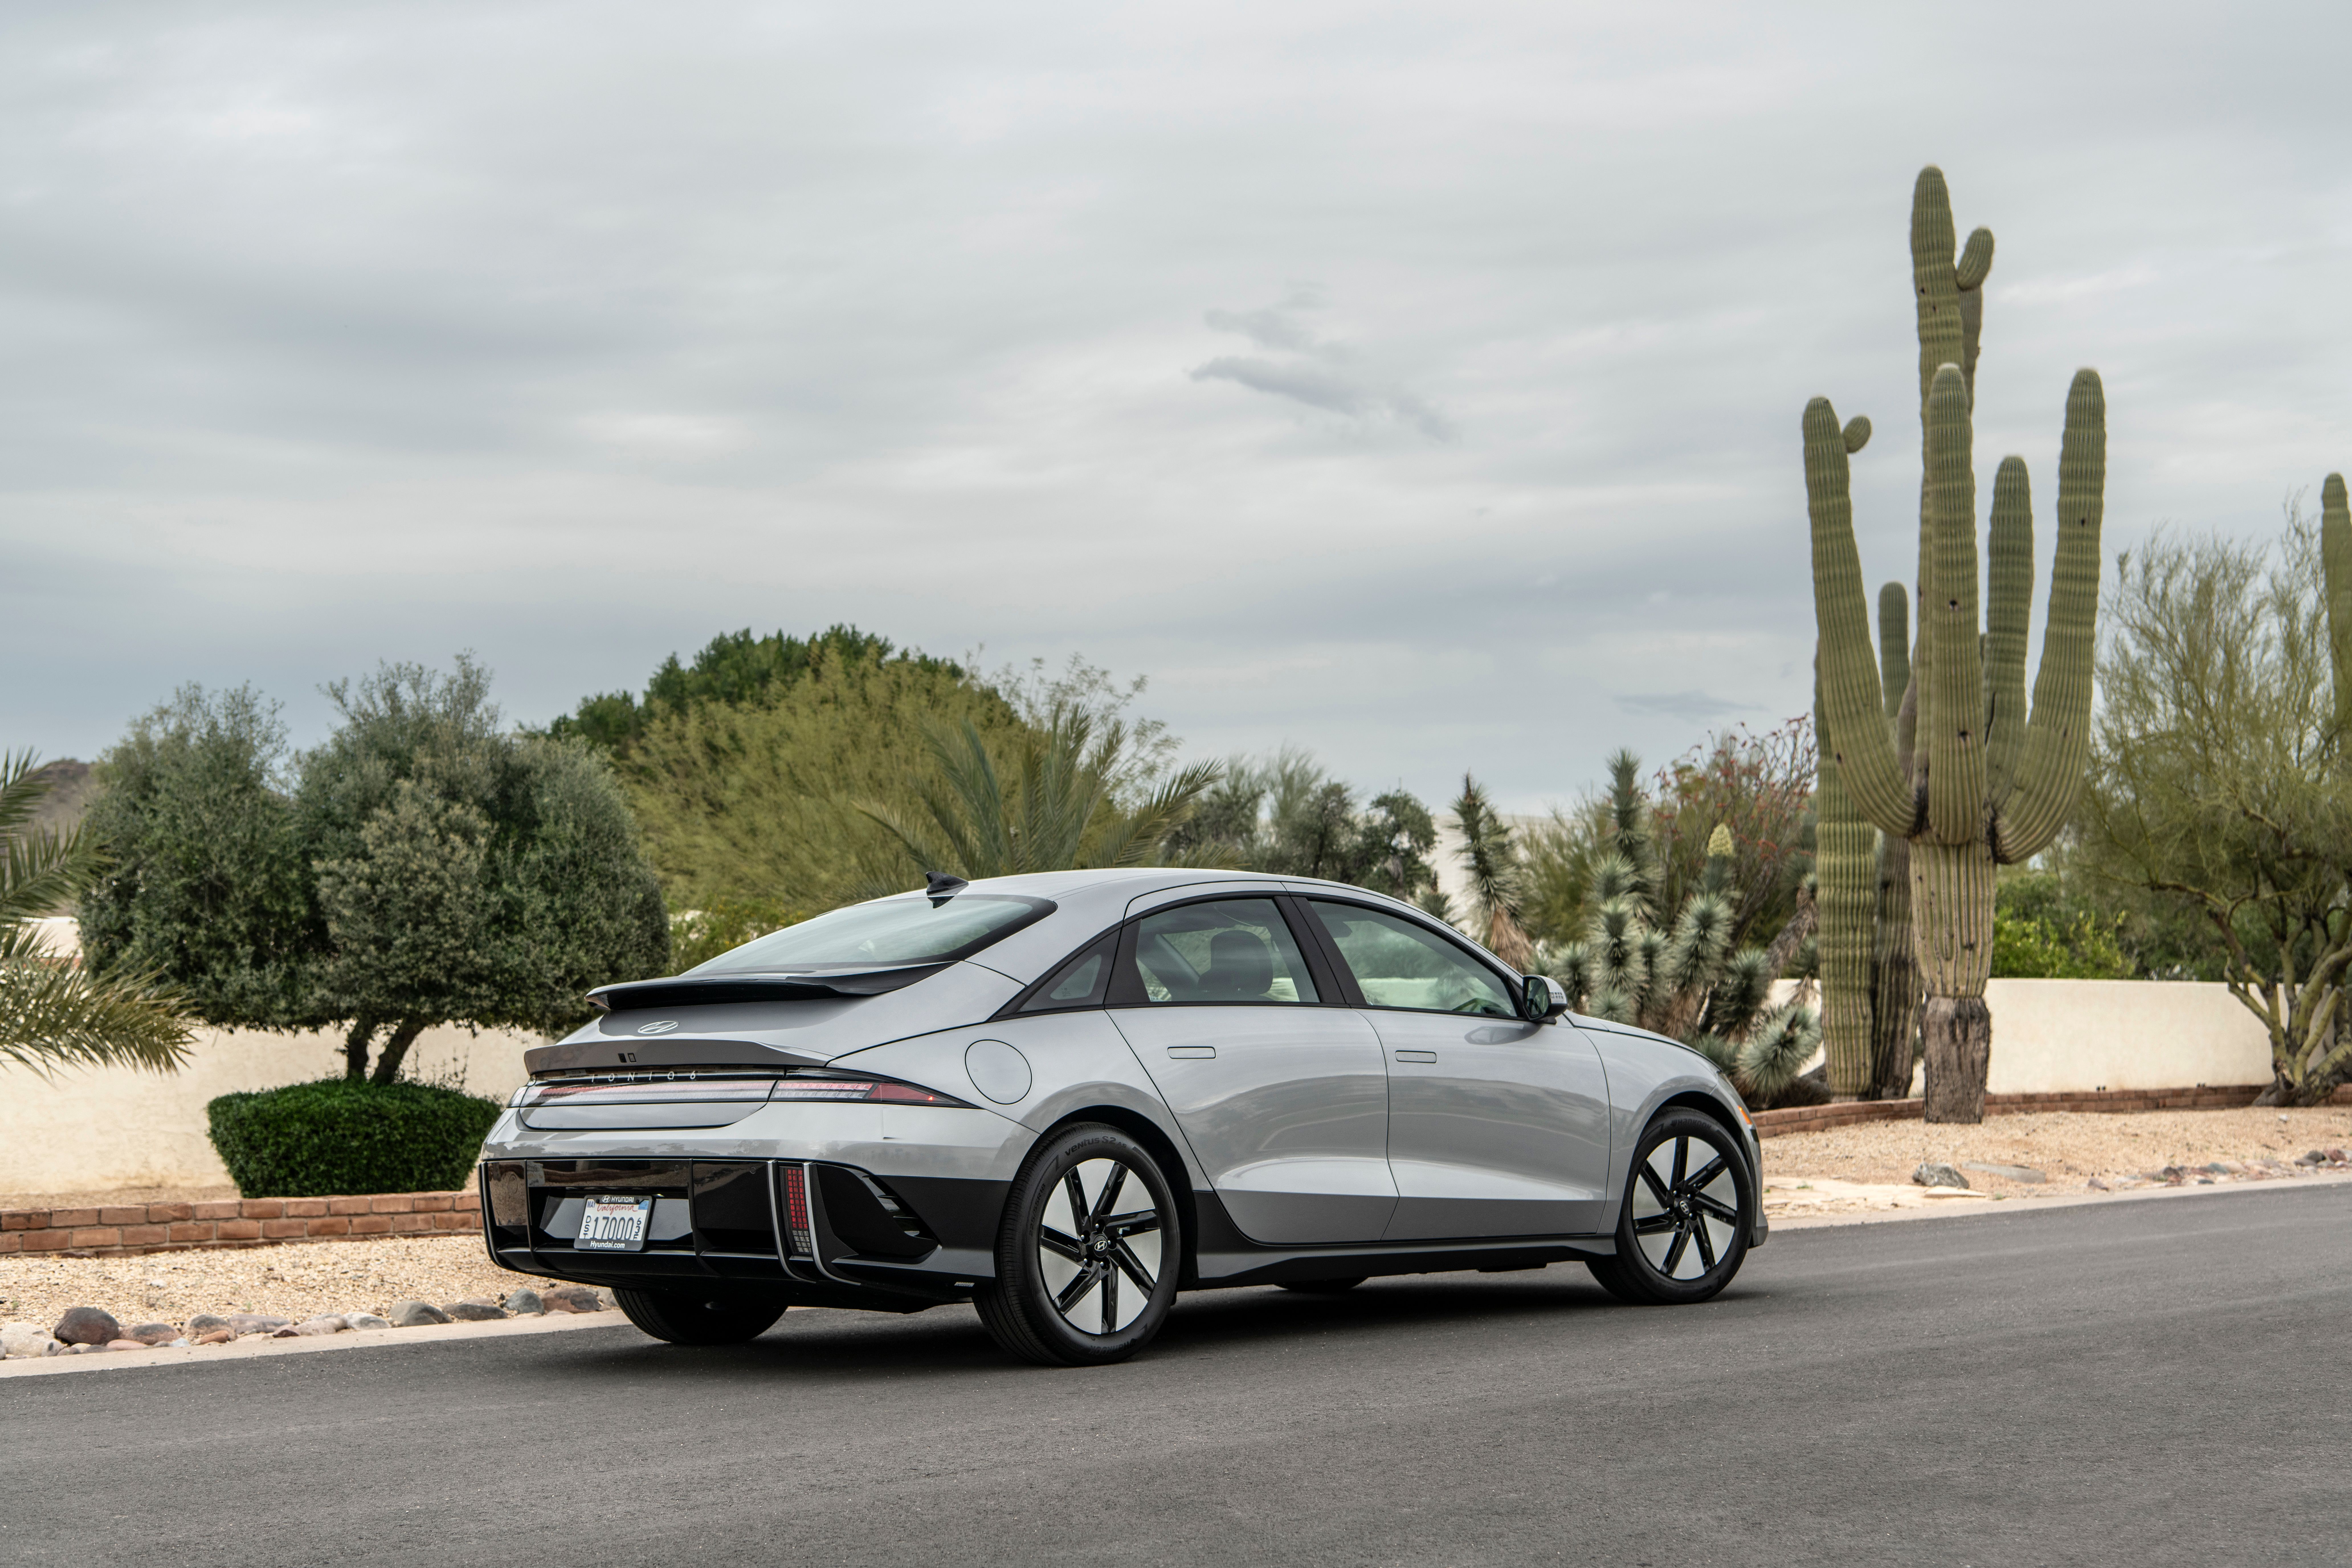 The 2023 Hyundai Ioniq 6 EV in gray, parked in a desert setting